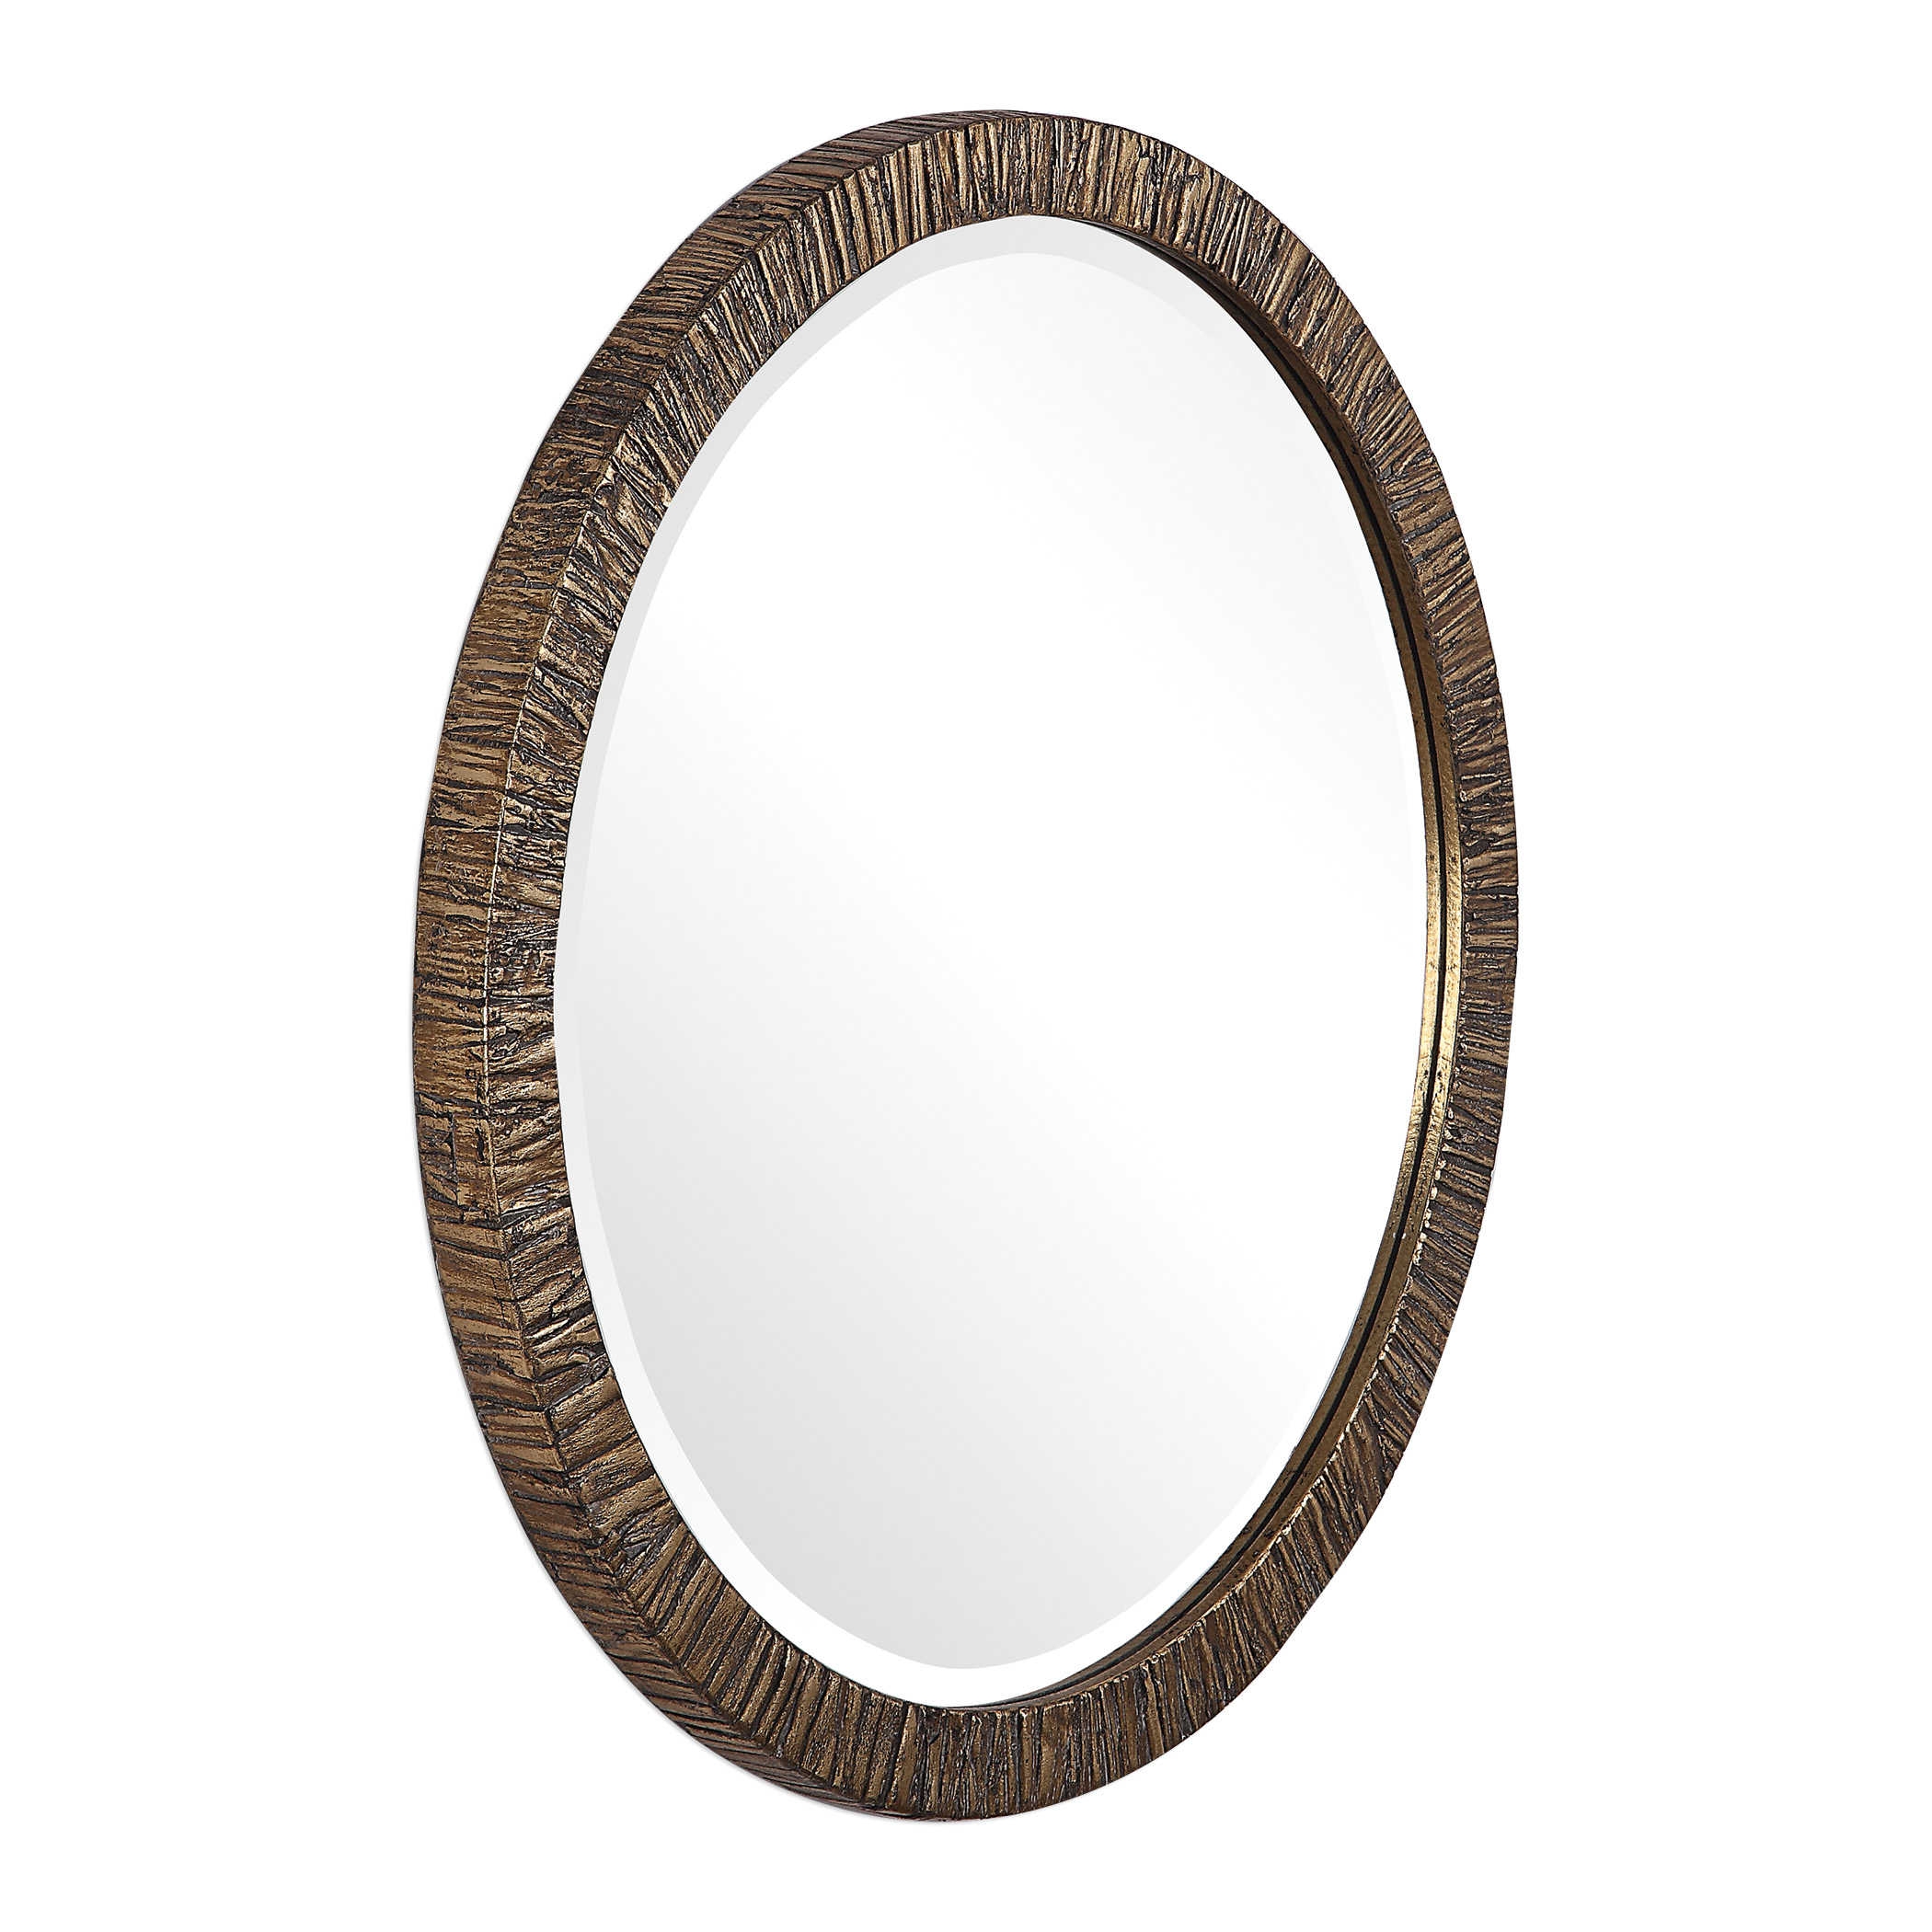 Wayde Round Mirror - Image 1